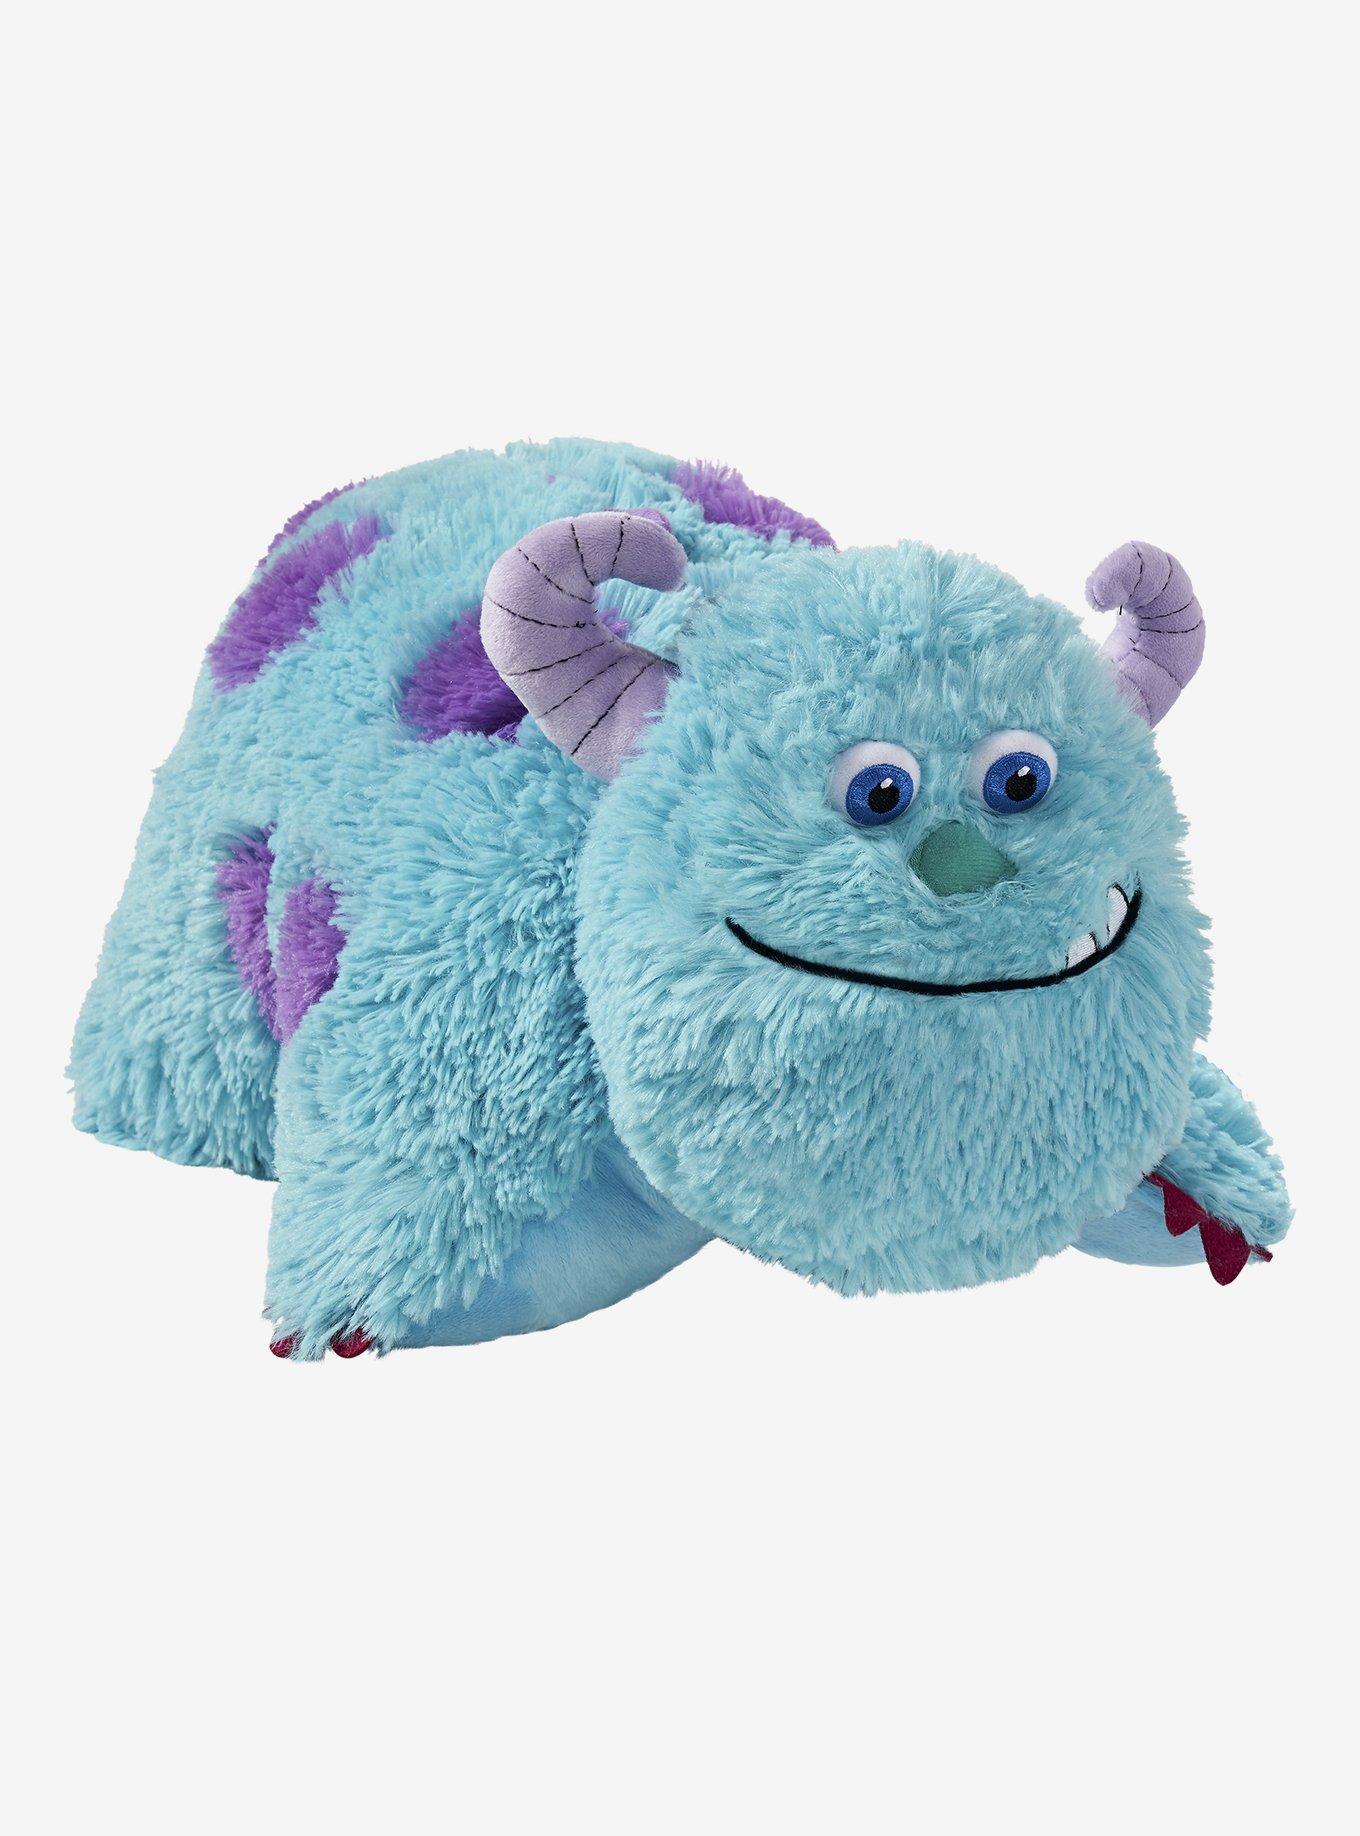 Disney Pixar Monsters Inc. Sulley Pillow Pets Plush Toy